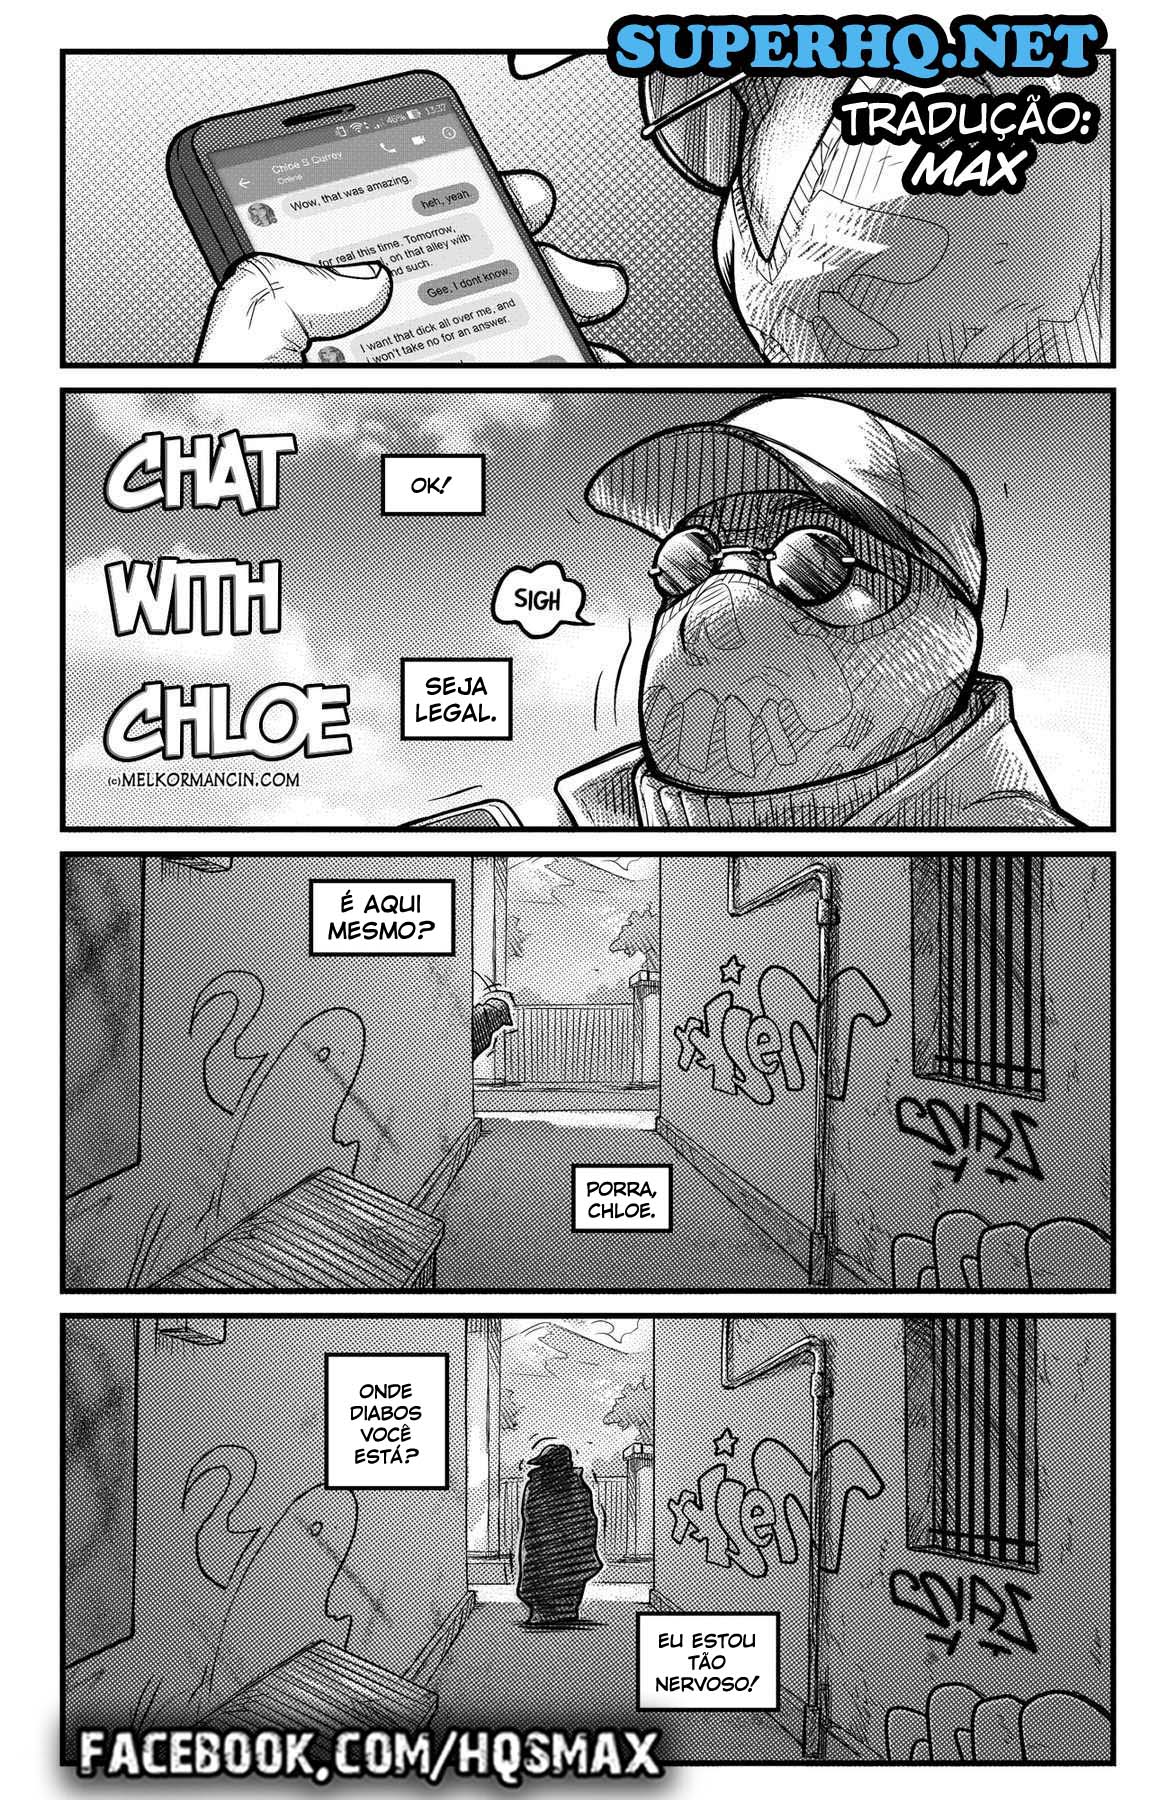 A Chat With Chloe [Melkormancin] | RevistaseQuadrinhos ...